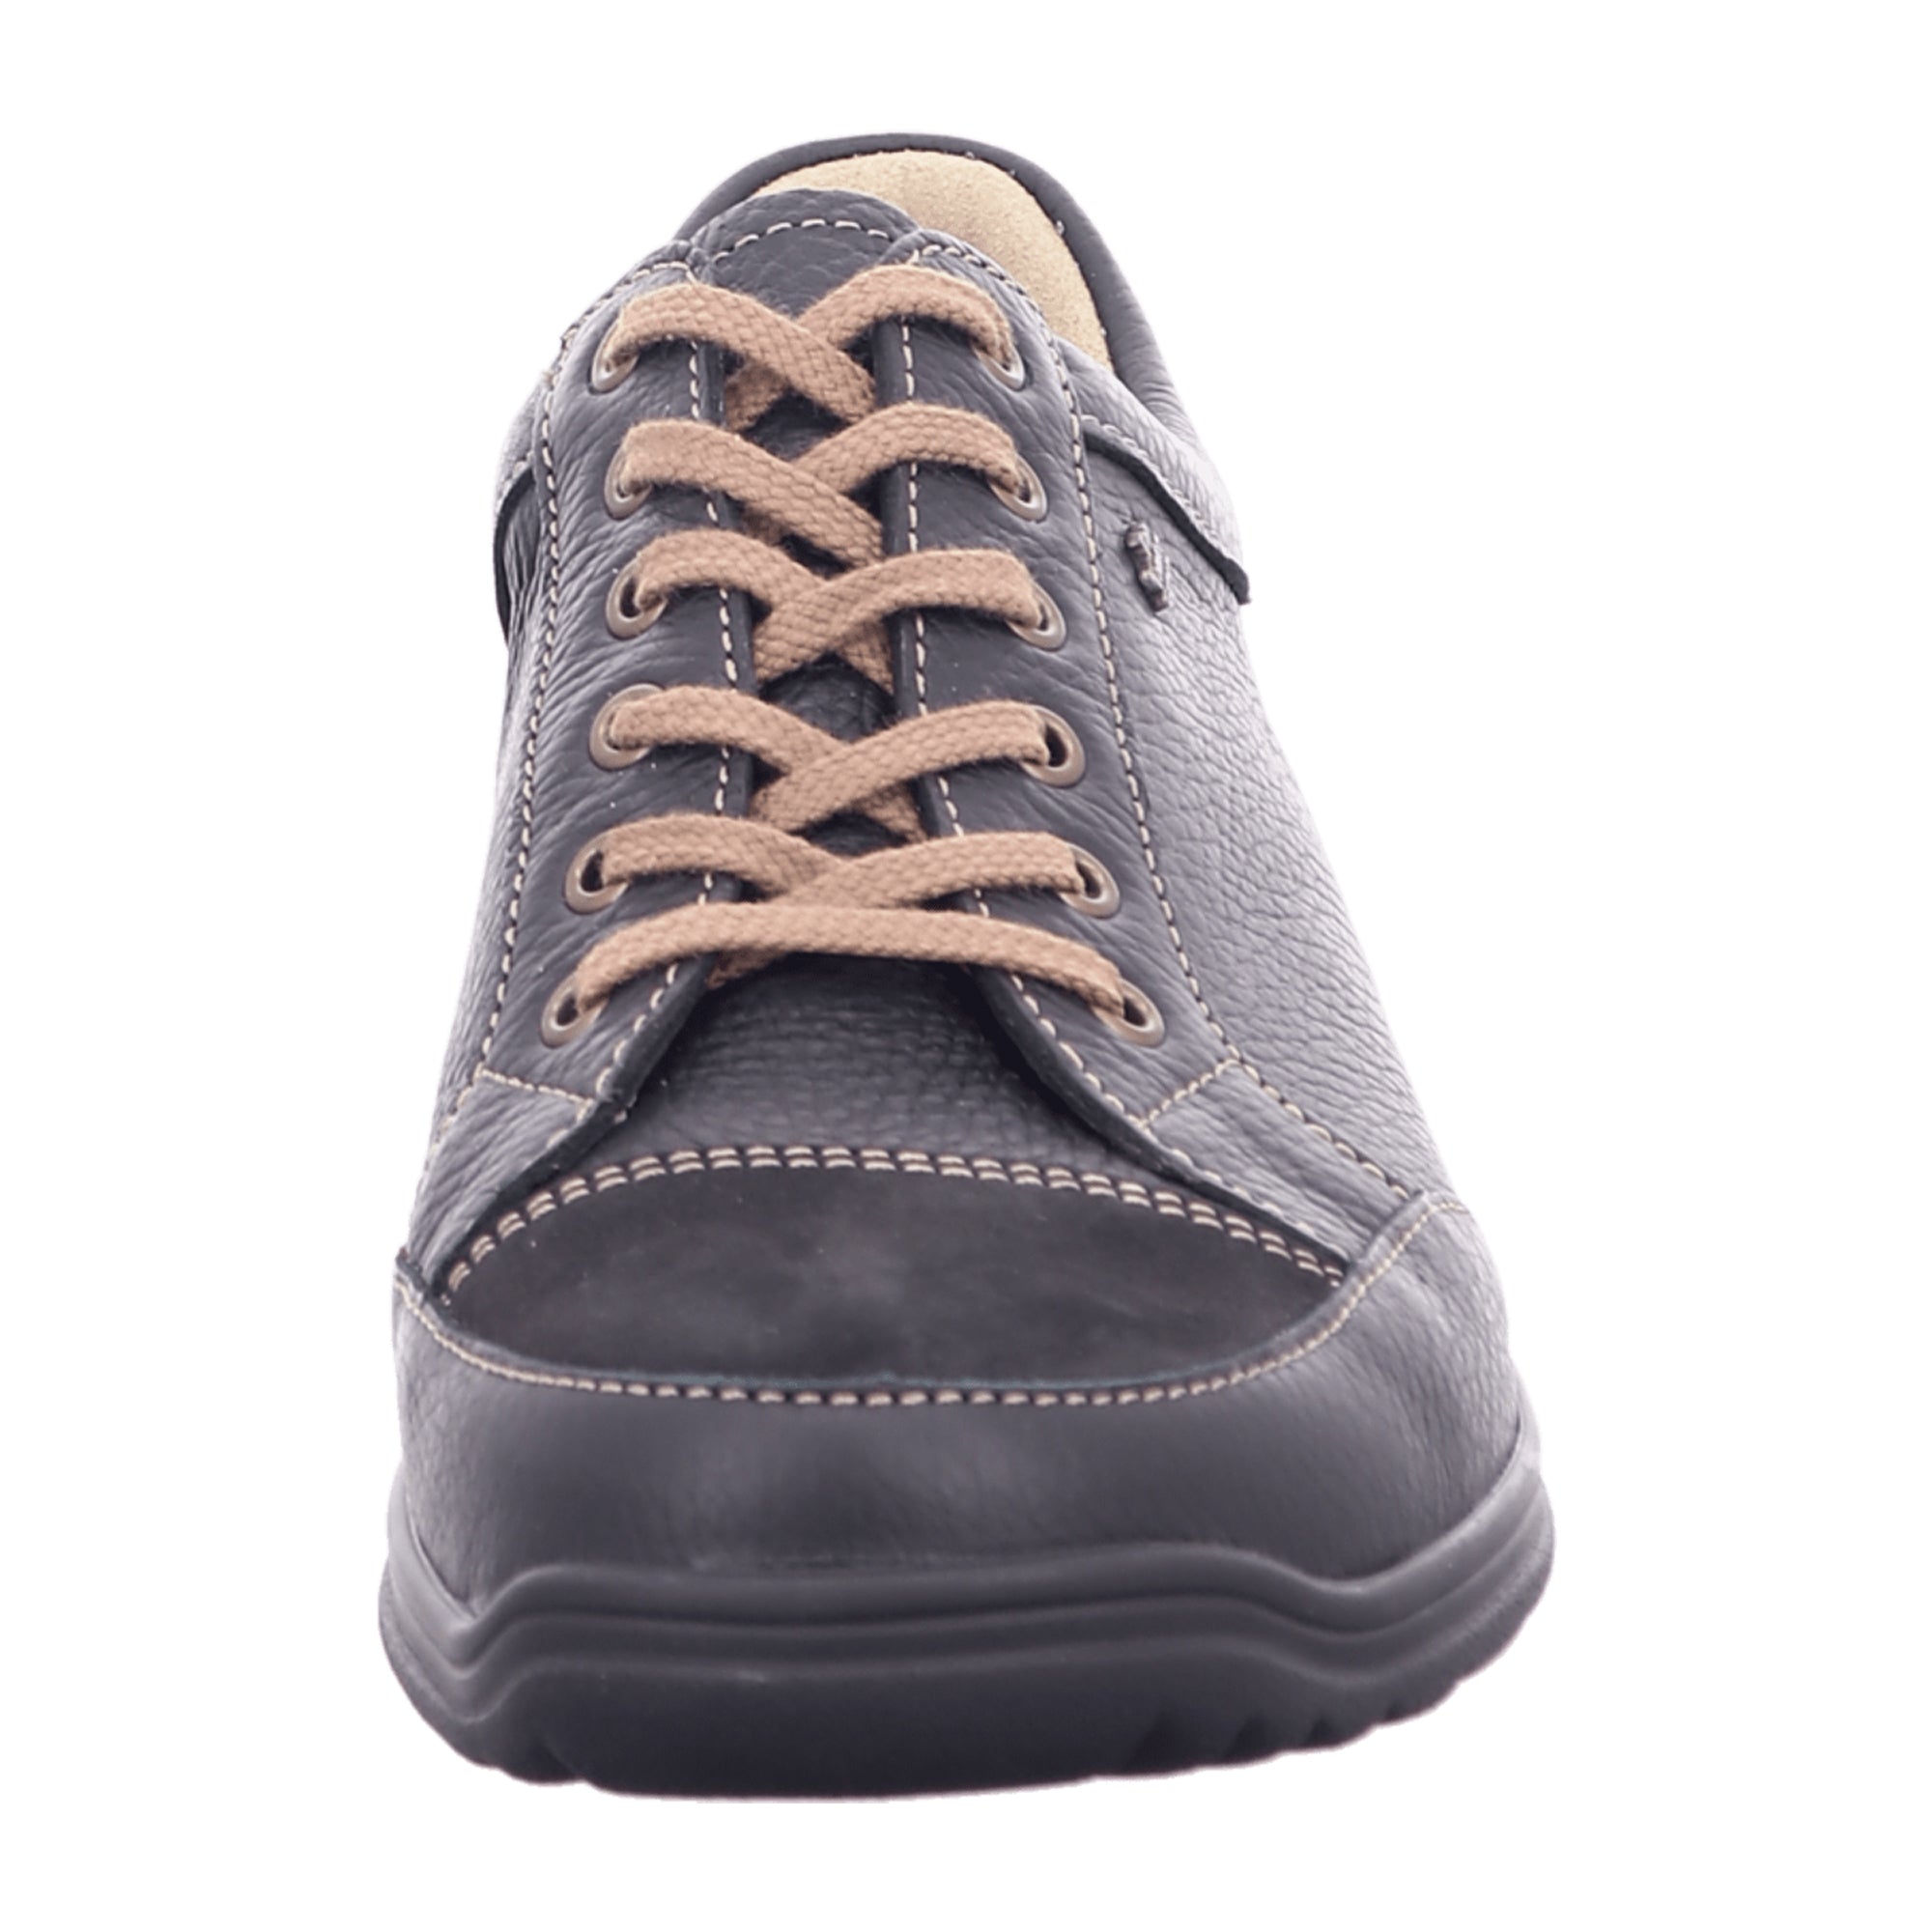 Finn Comfort Men’s Black Comfort Lace-Up Shoes | Stylish & Durable